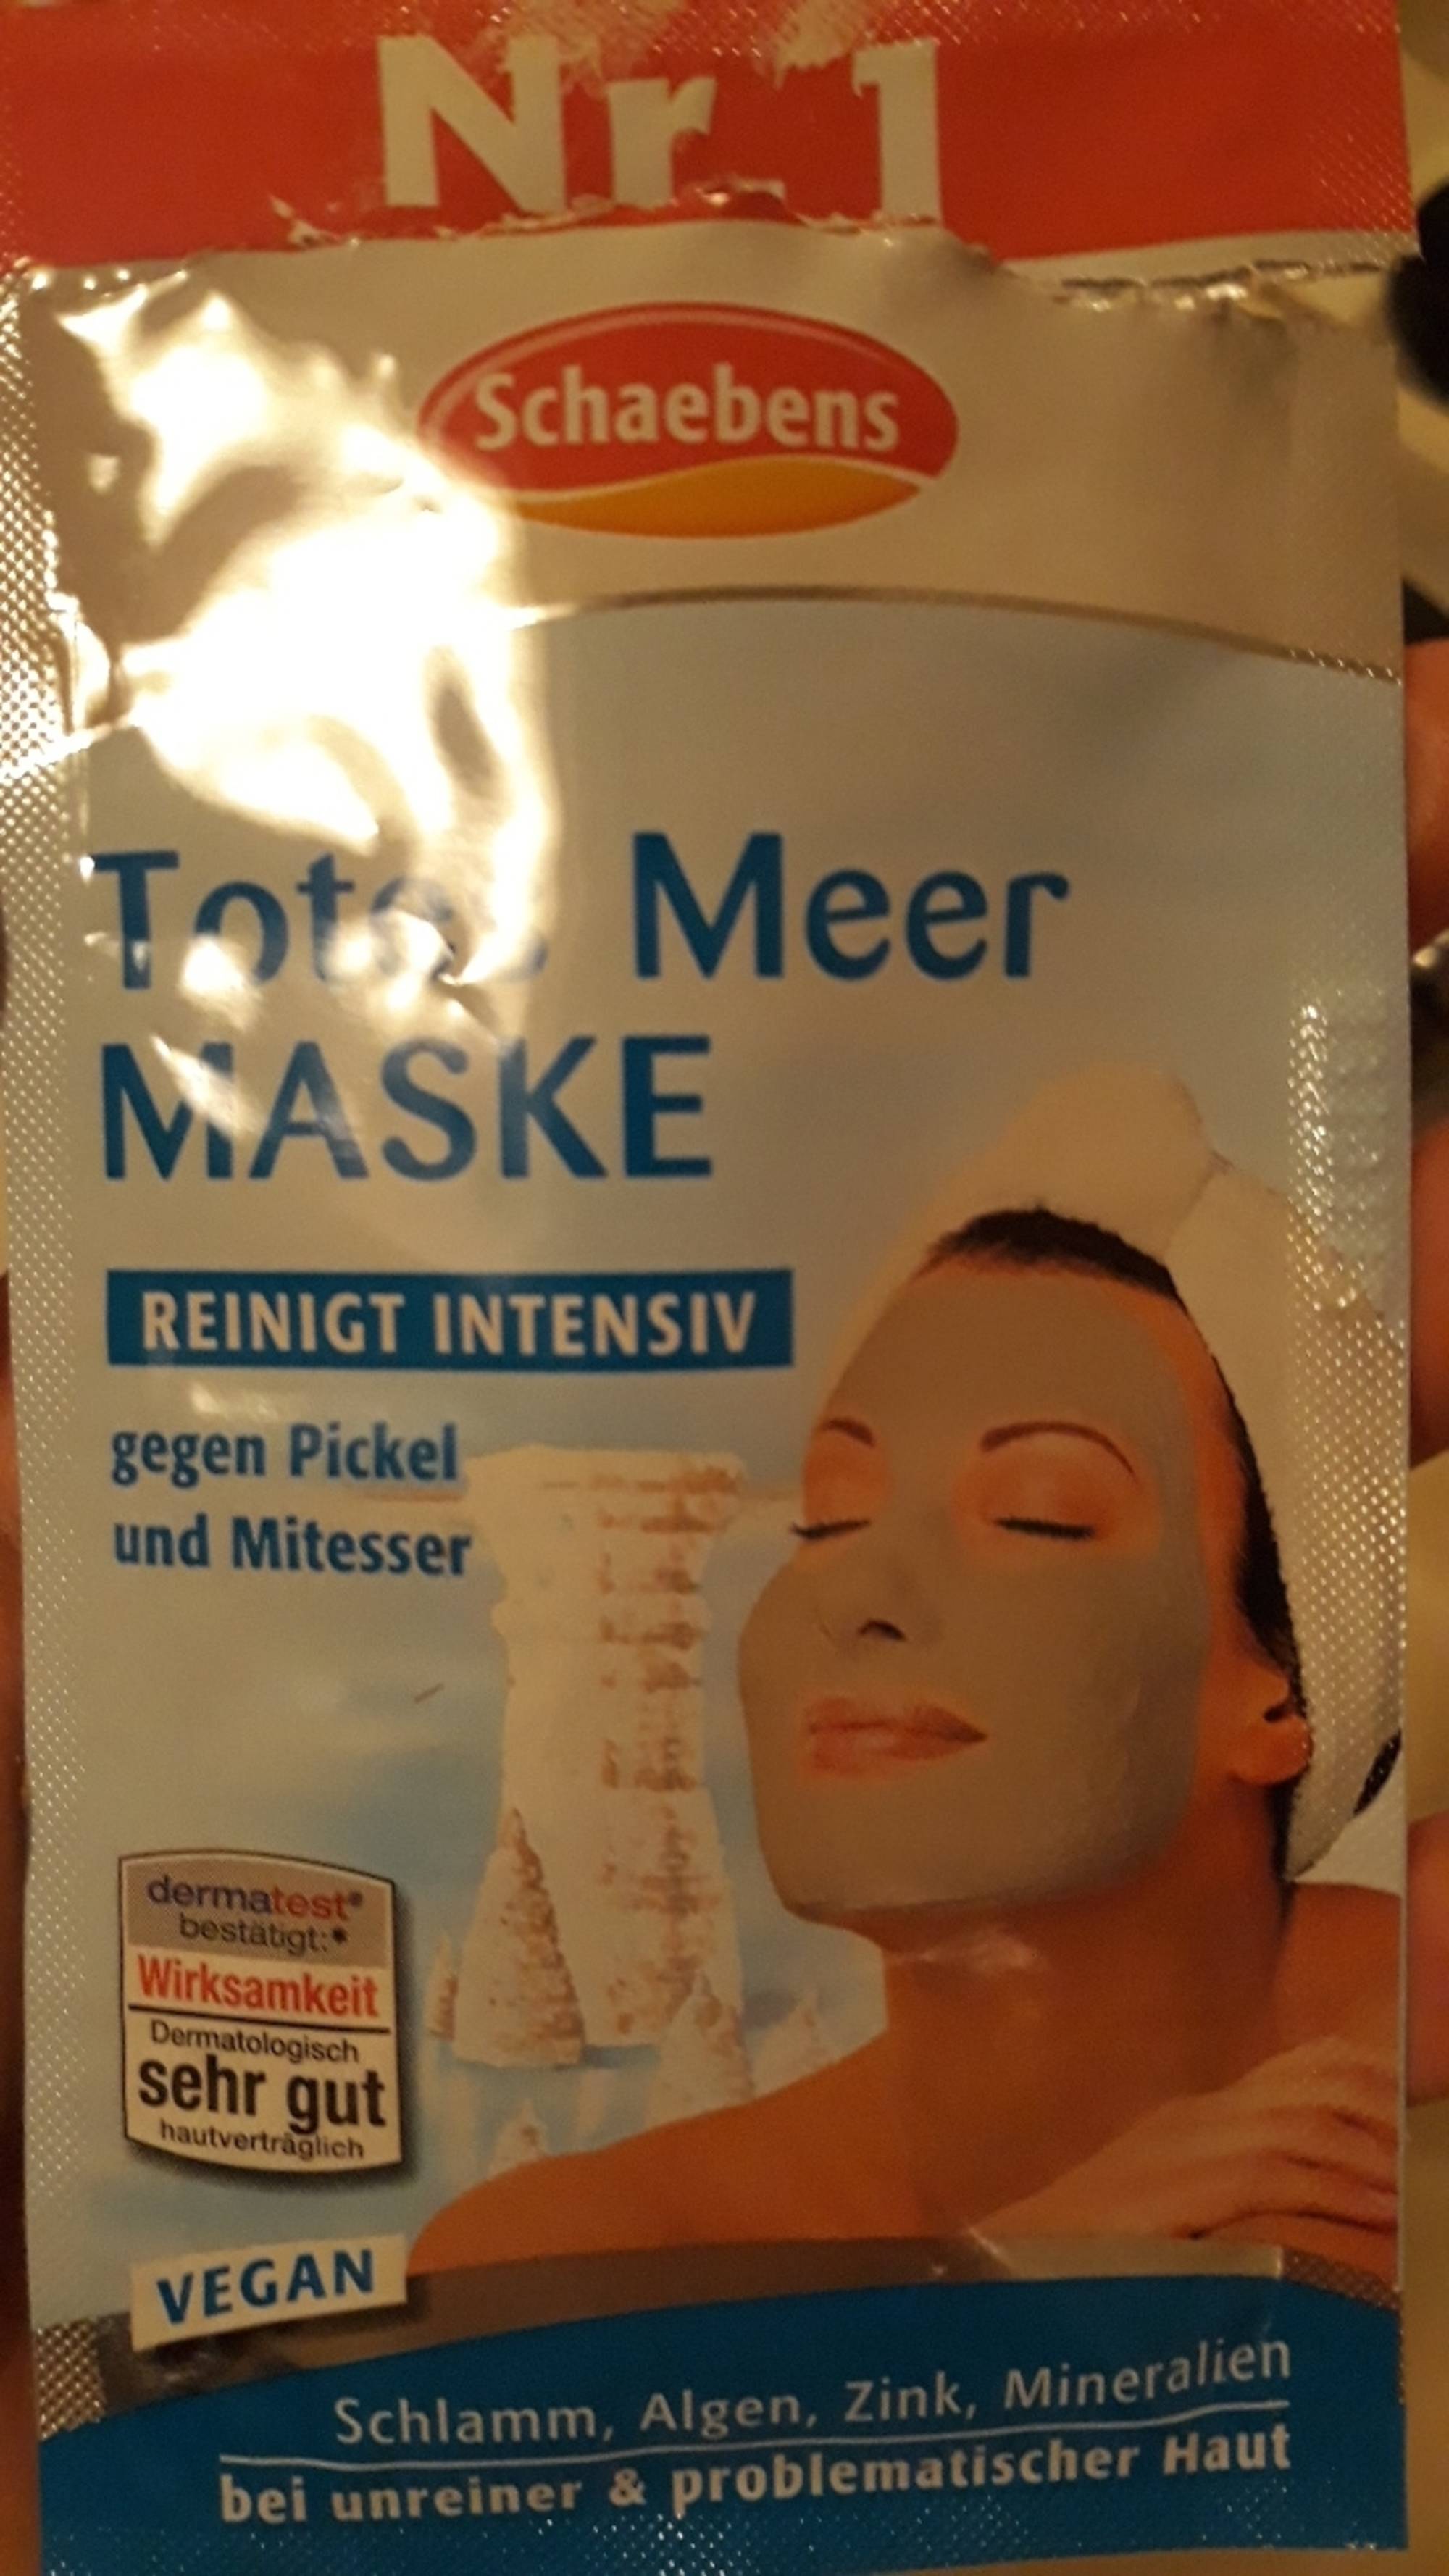 SCHAEBENS - Reinigt intensiv - Totes meer maske